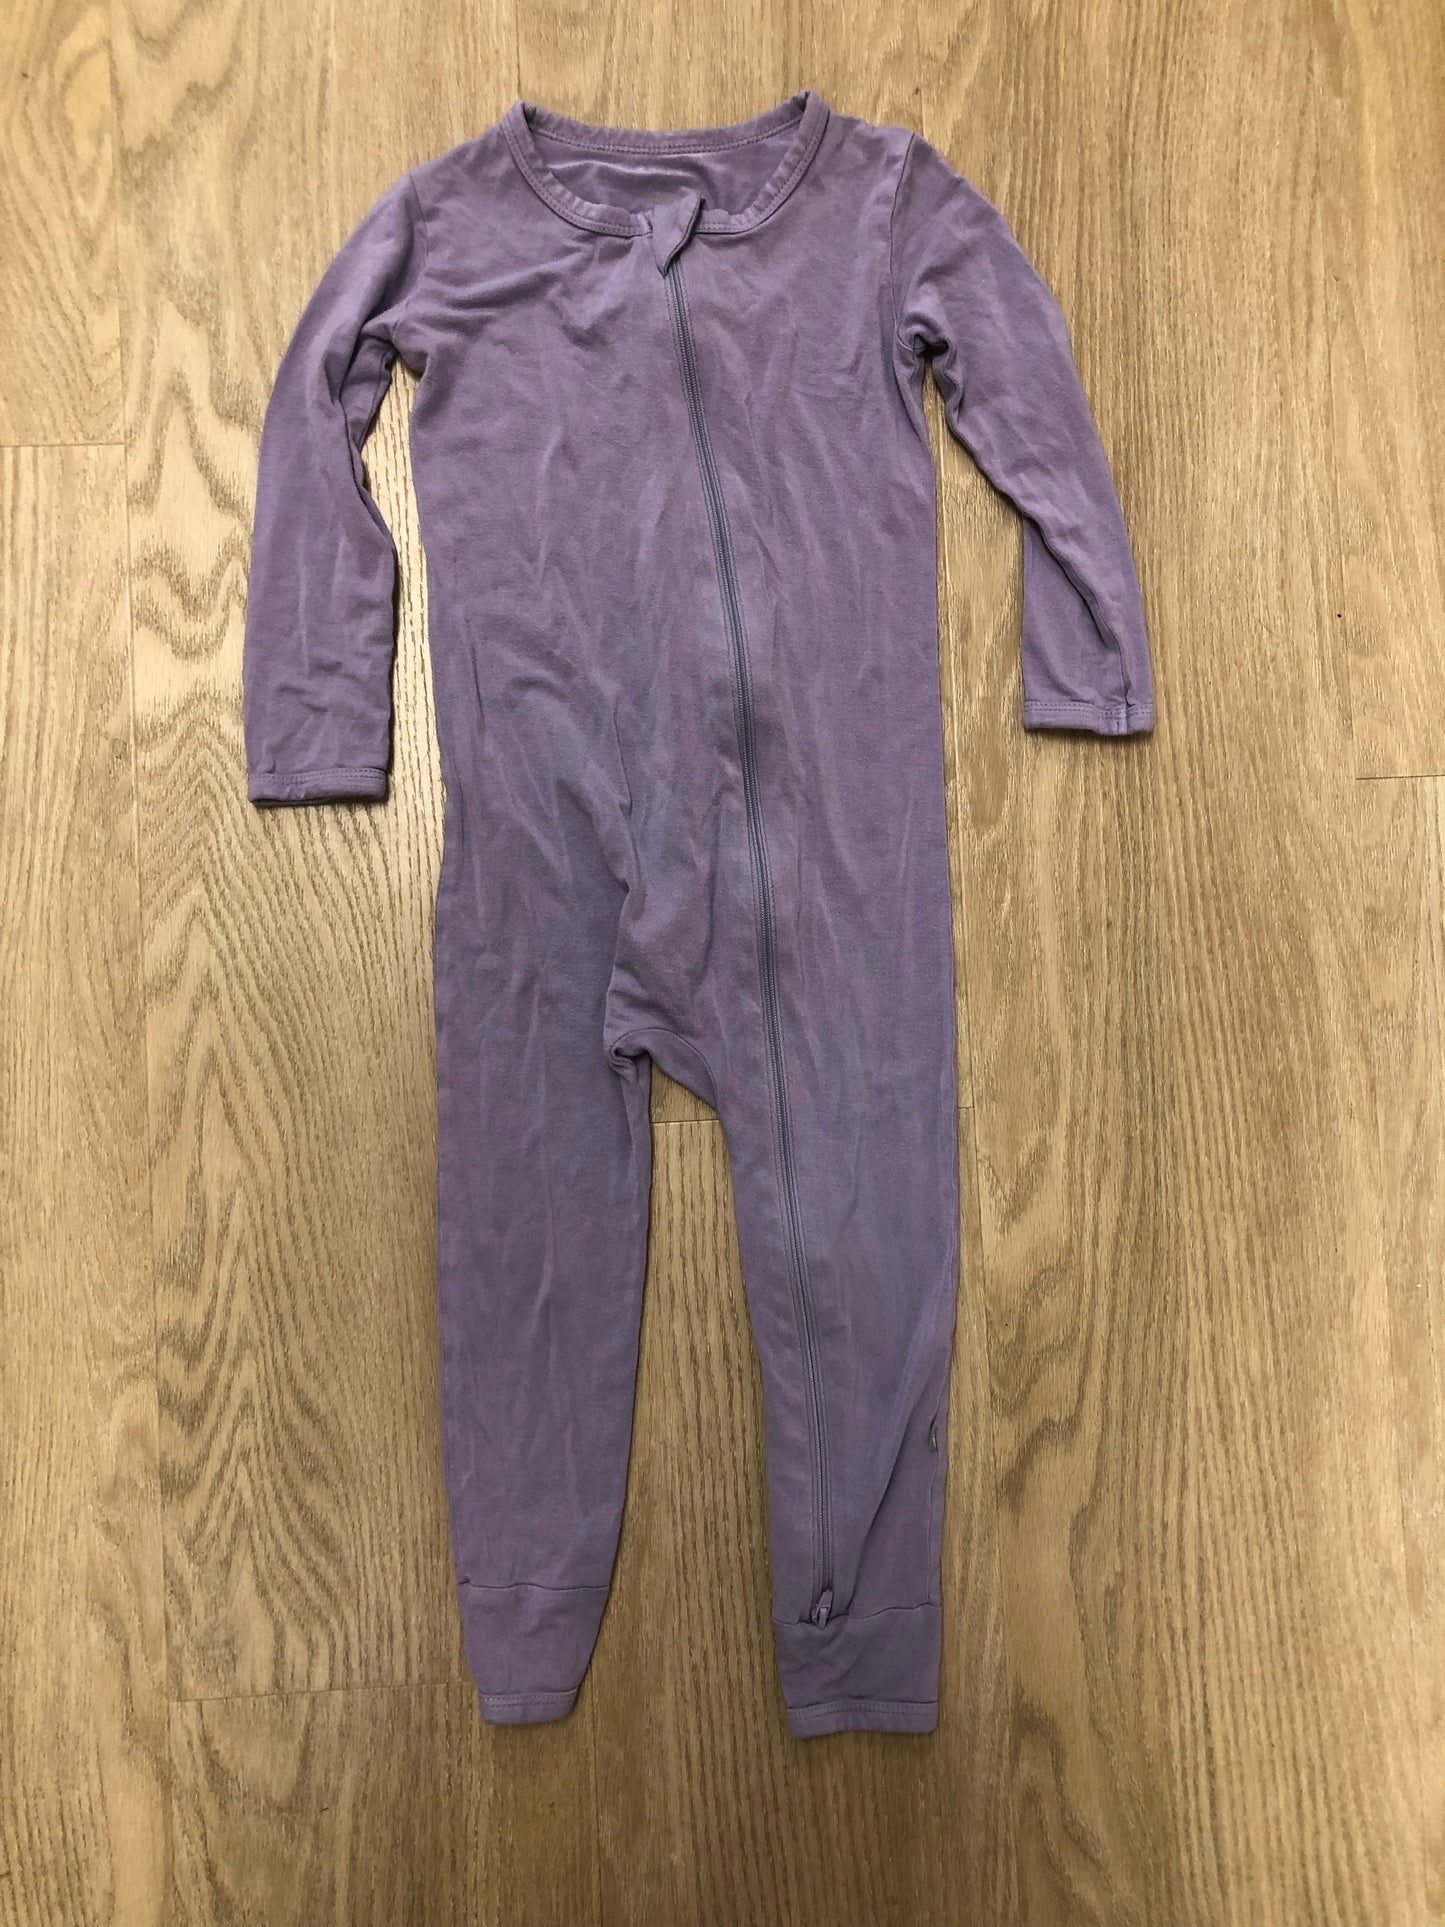 Kyte Child Size 4T lavender Pajamas